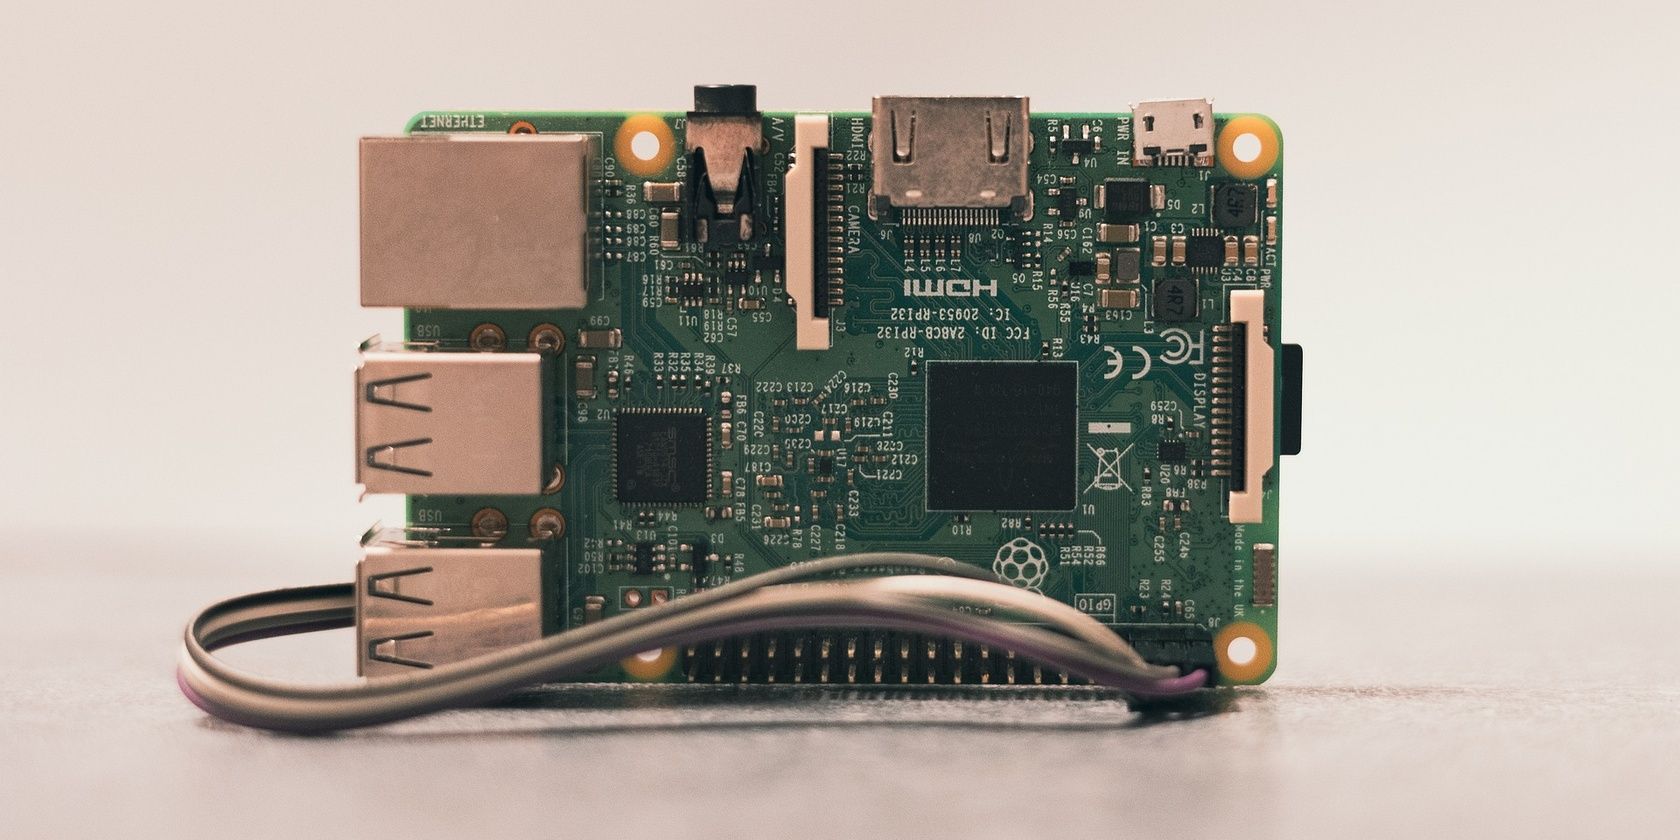 Raspberry Pi with SD card